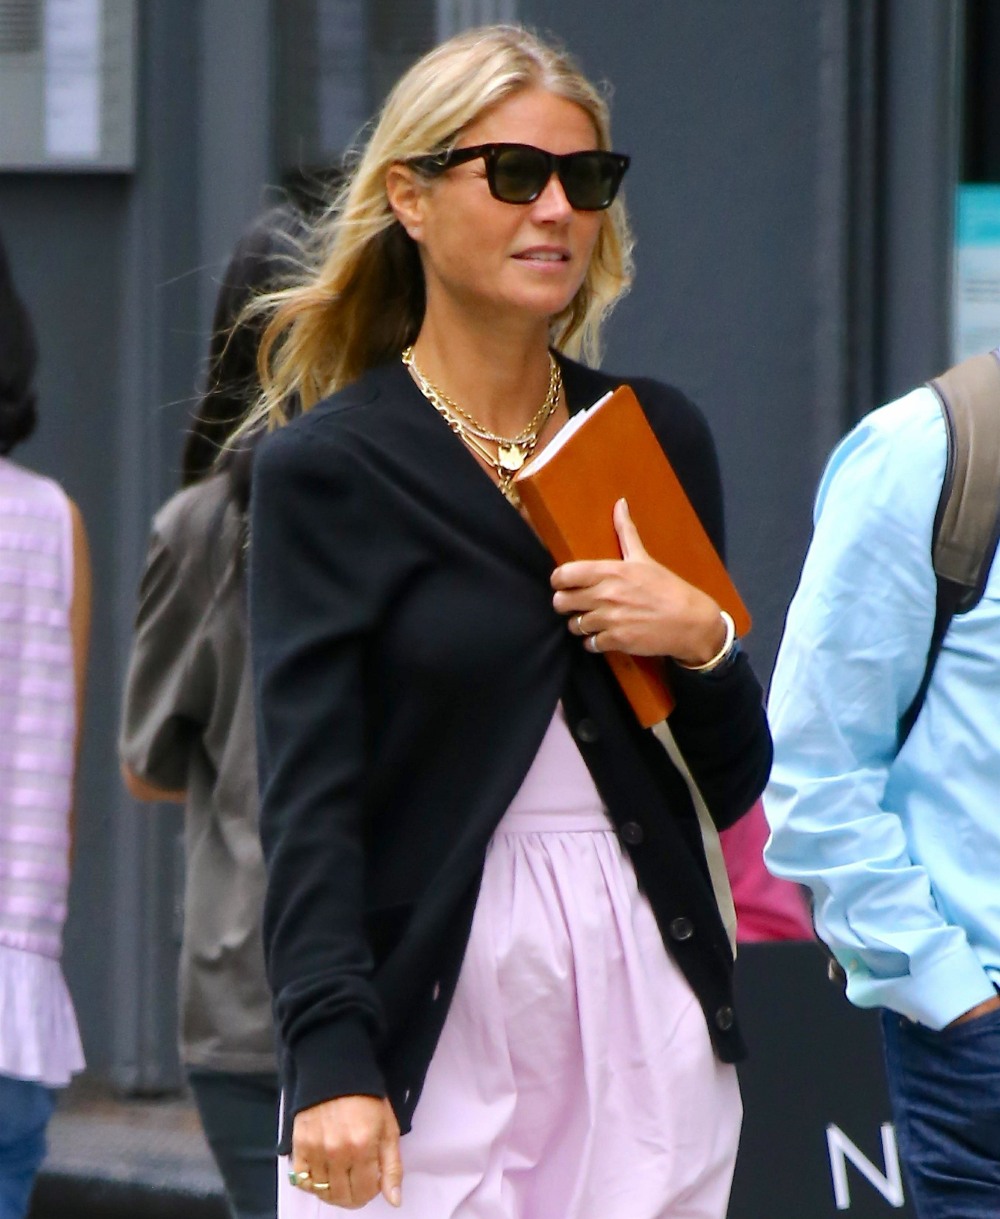 Gwyneth Paltrow walks with a friend on Prince Street in Soho, New York